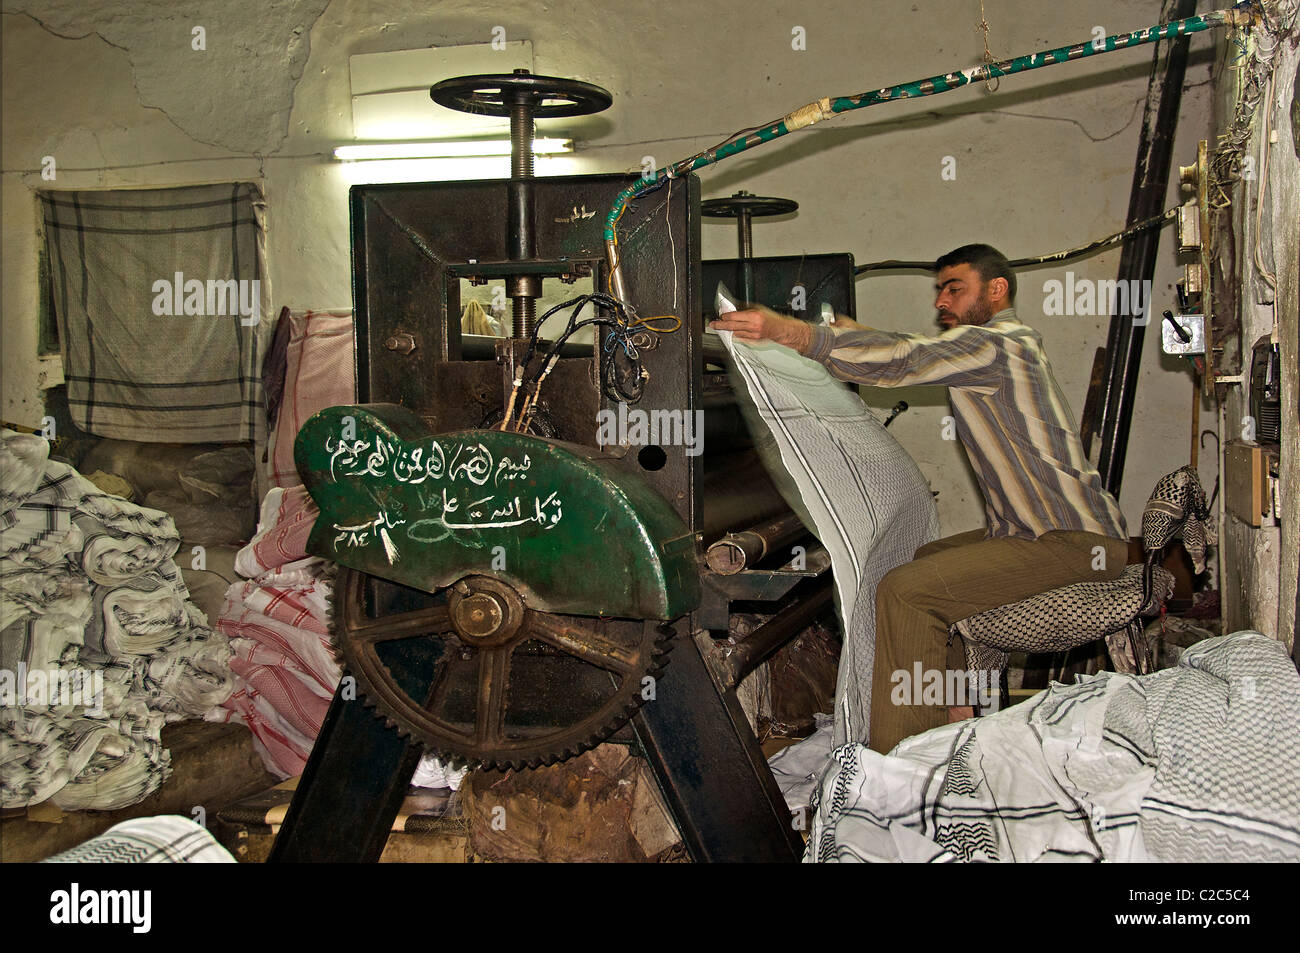 Damascus Syria Bazaar Souk Souq market shop laundry dry cleaning press shop Stock Photo